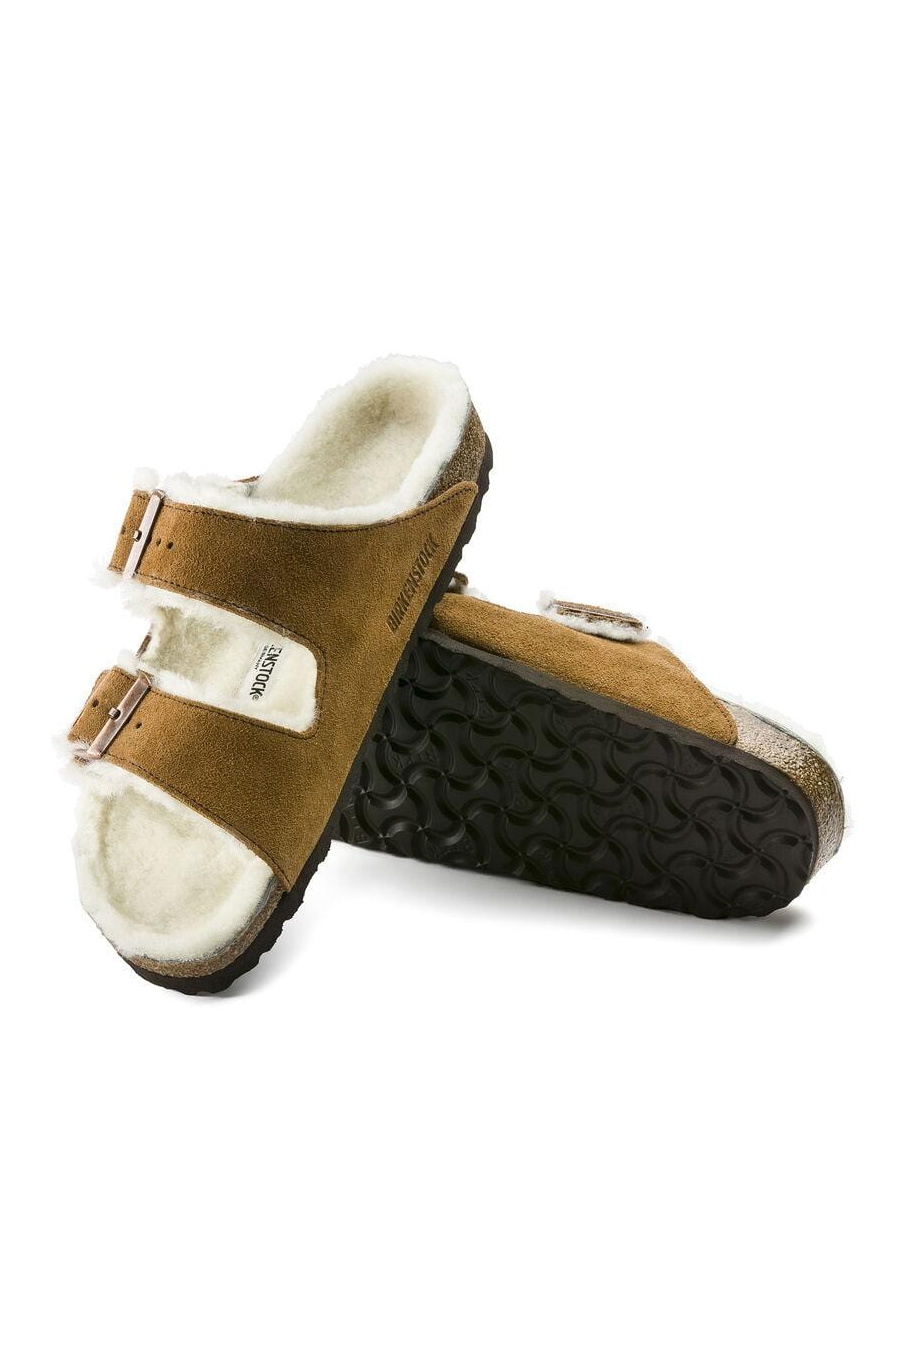 Birkenstock Arizona Mink Shearling Sandal - Regular